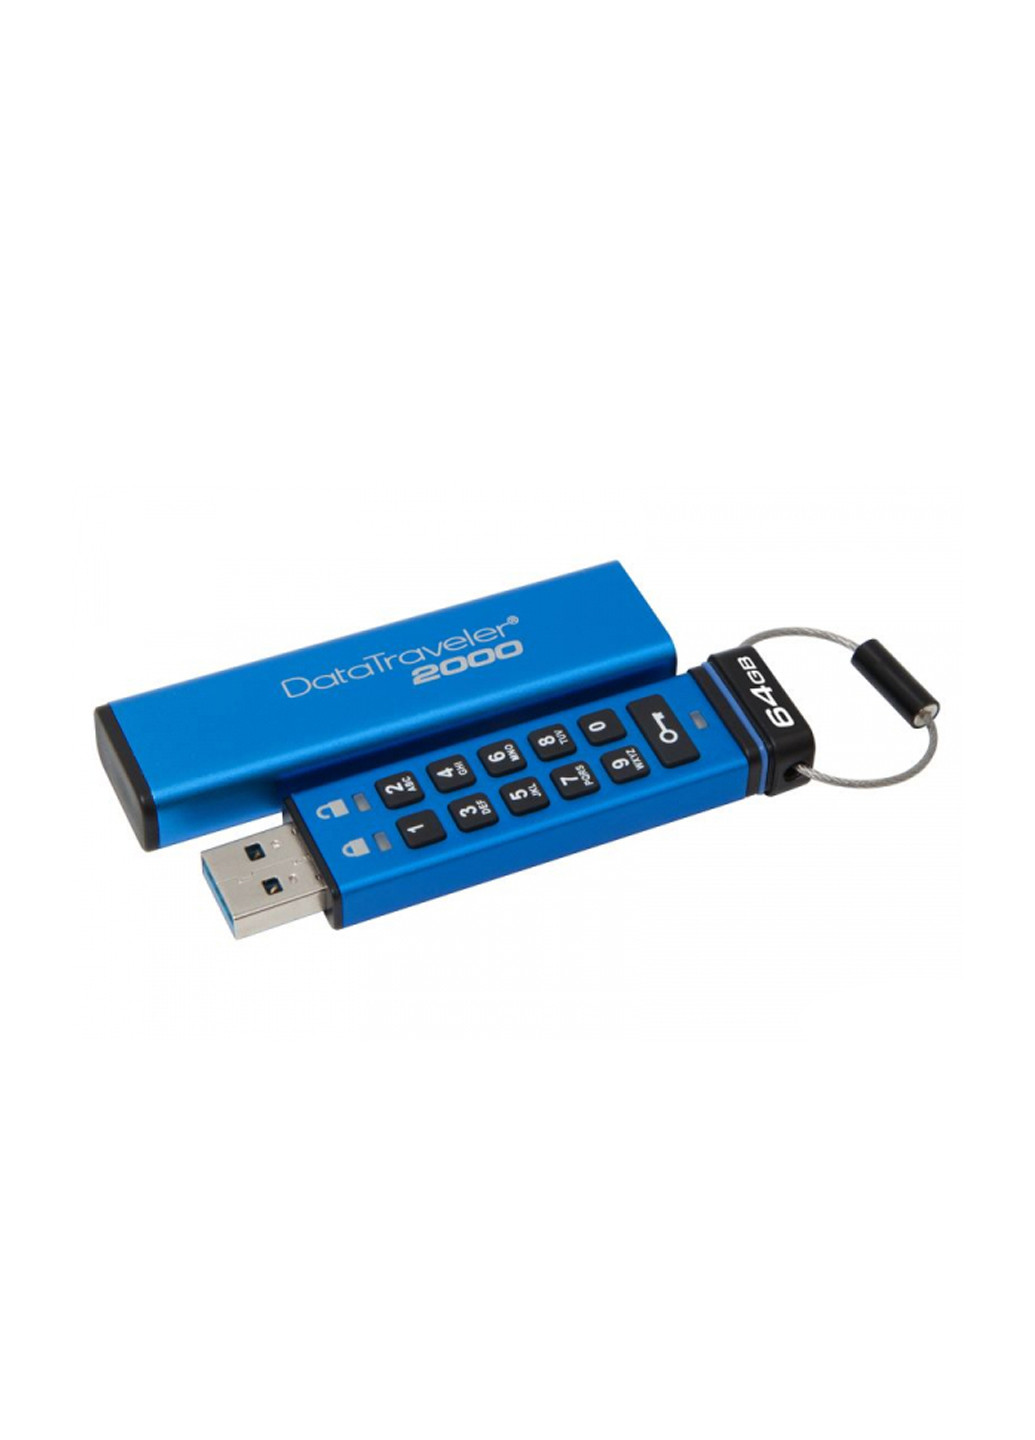 Флеш память USB DataTraveler 2000 64GB USB 3.1 (DT2000/64GB) Kingston флеш память usb kingston datatraveler 2000 64gb usb 3.1 (dt2000/64gb) (136742841)